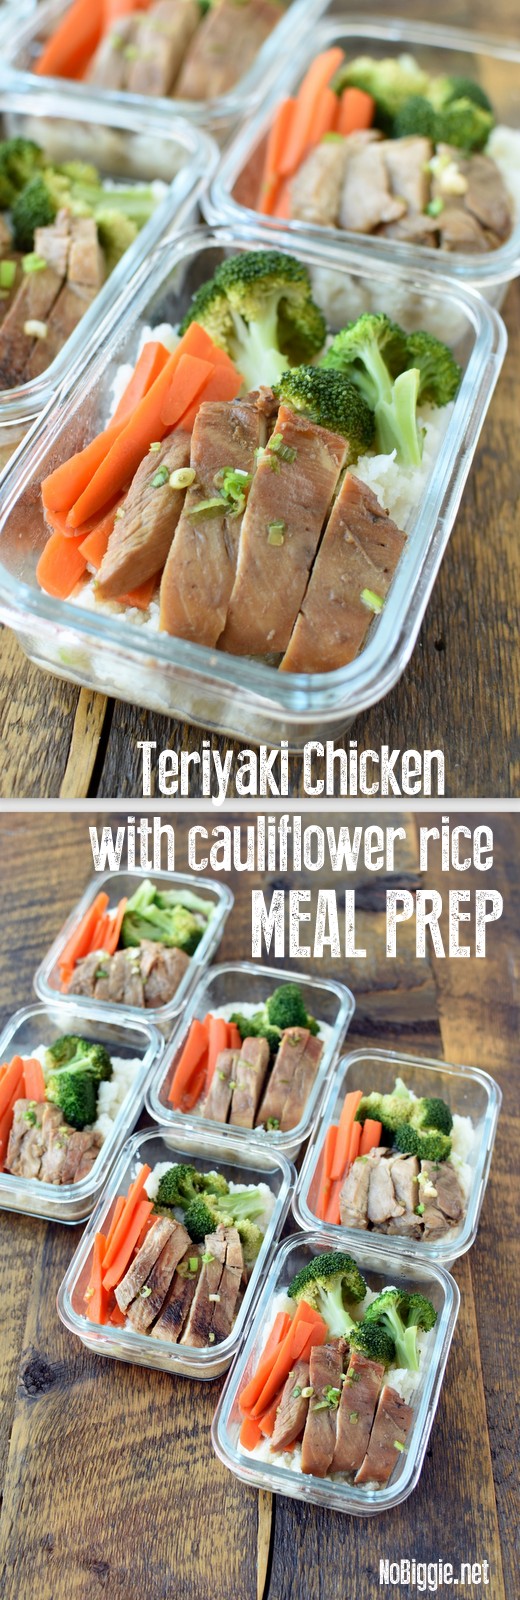 Teriyaki Chicken with cauliflower rice Meal Prep | NoBiggie.net